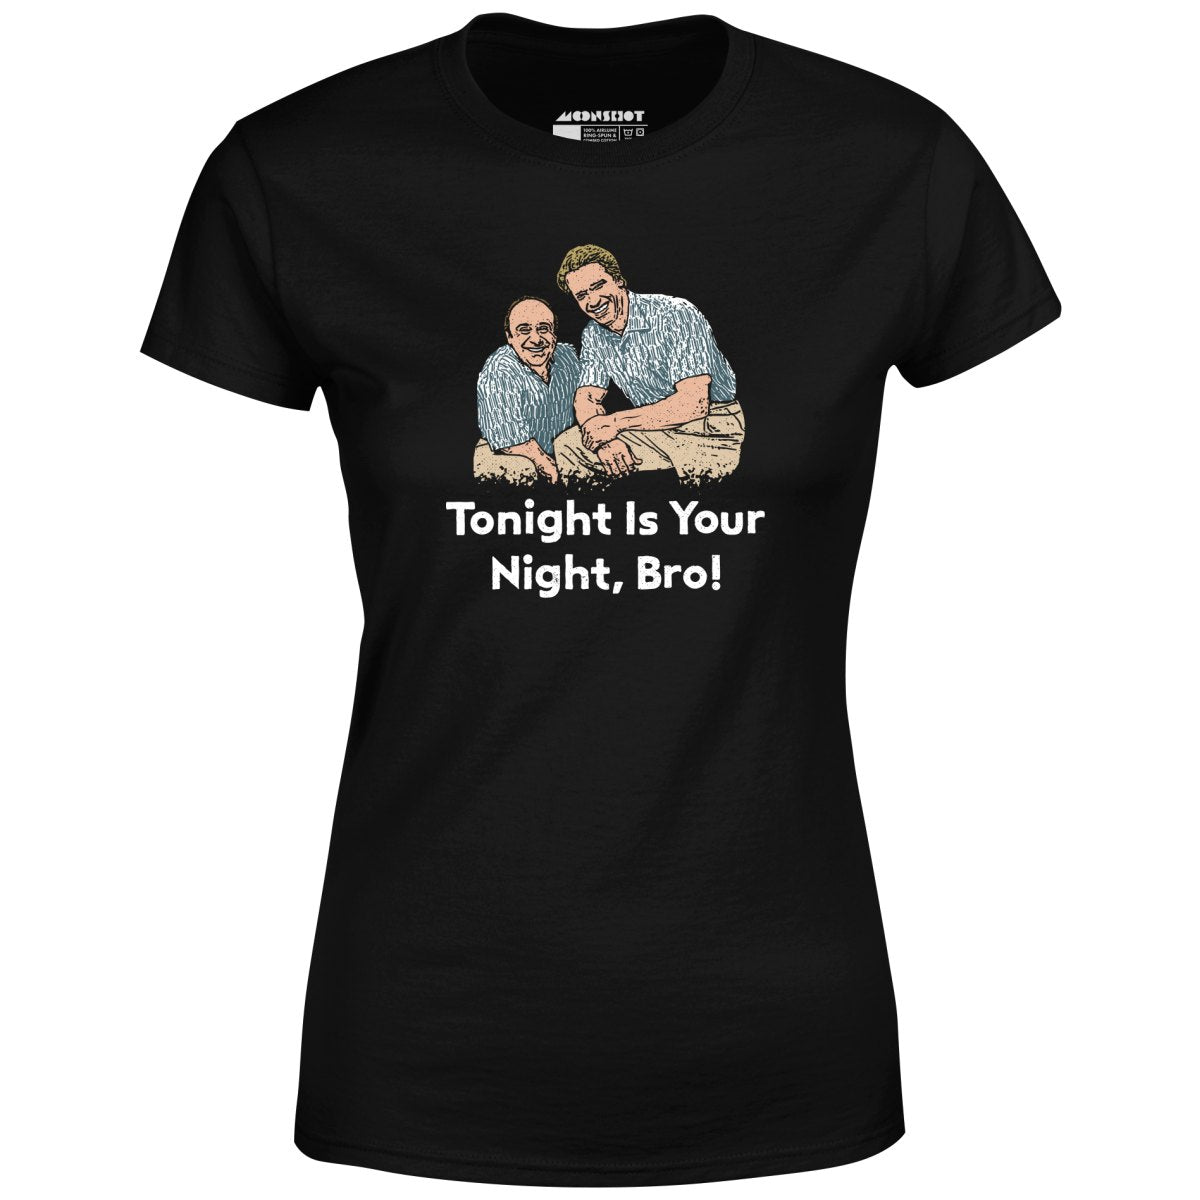 Tonight is Your Night, Bro! - Women's T-Shirt